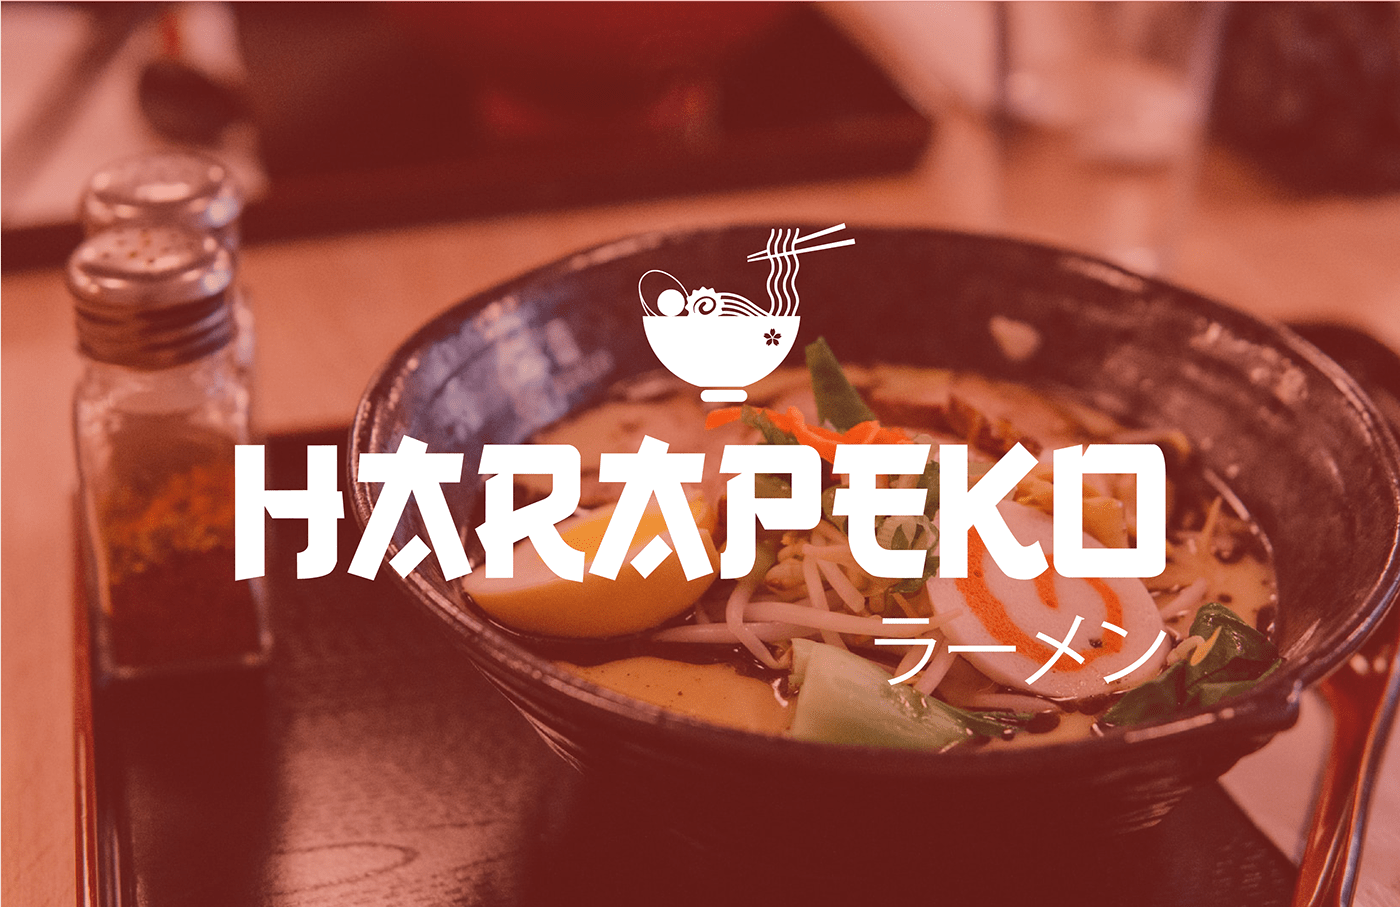 Logo and Branding for HARAPEKO ラーメン